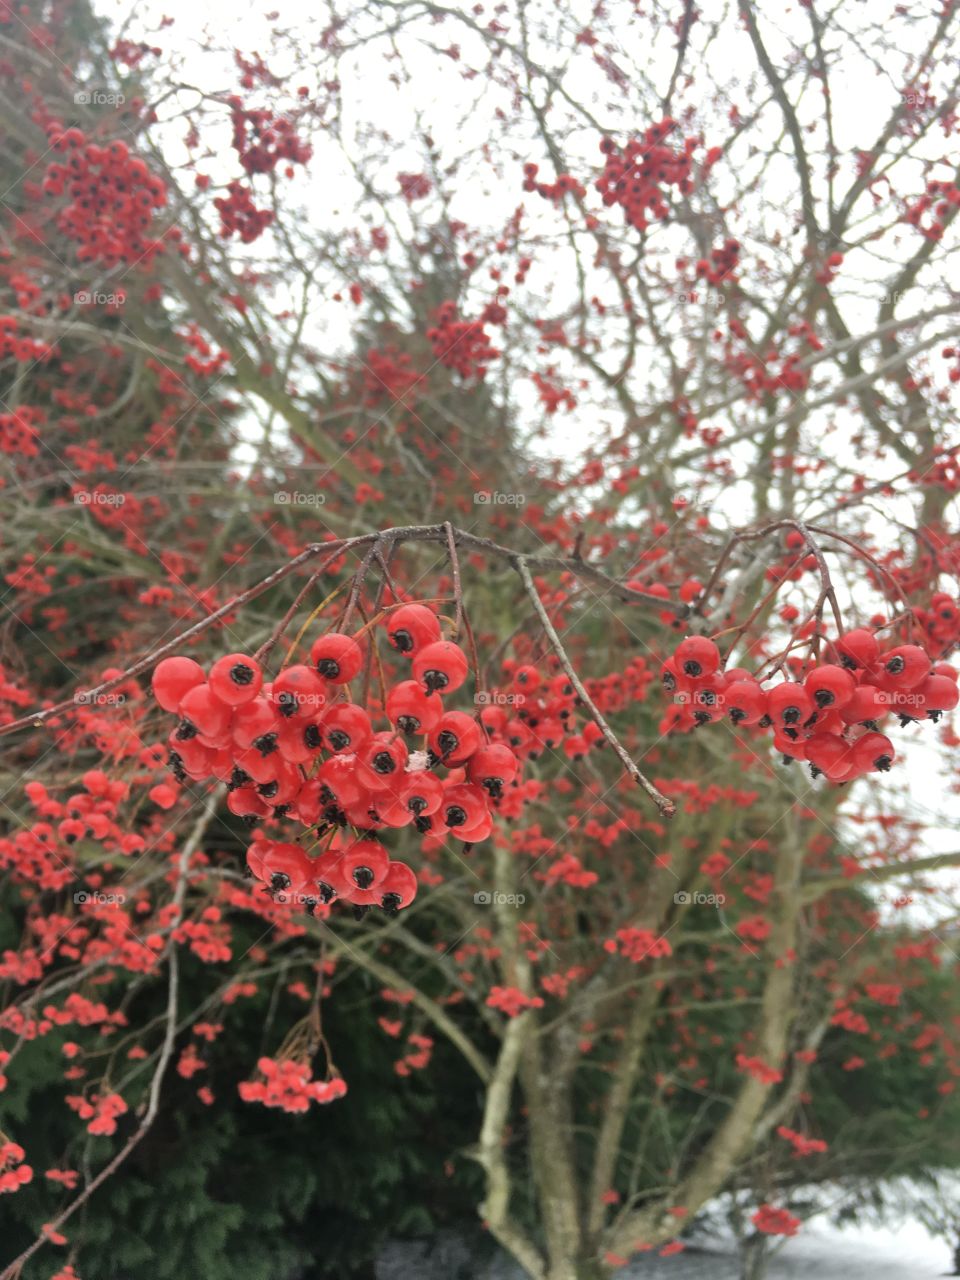 Winter red berries